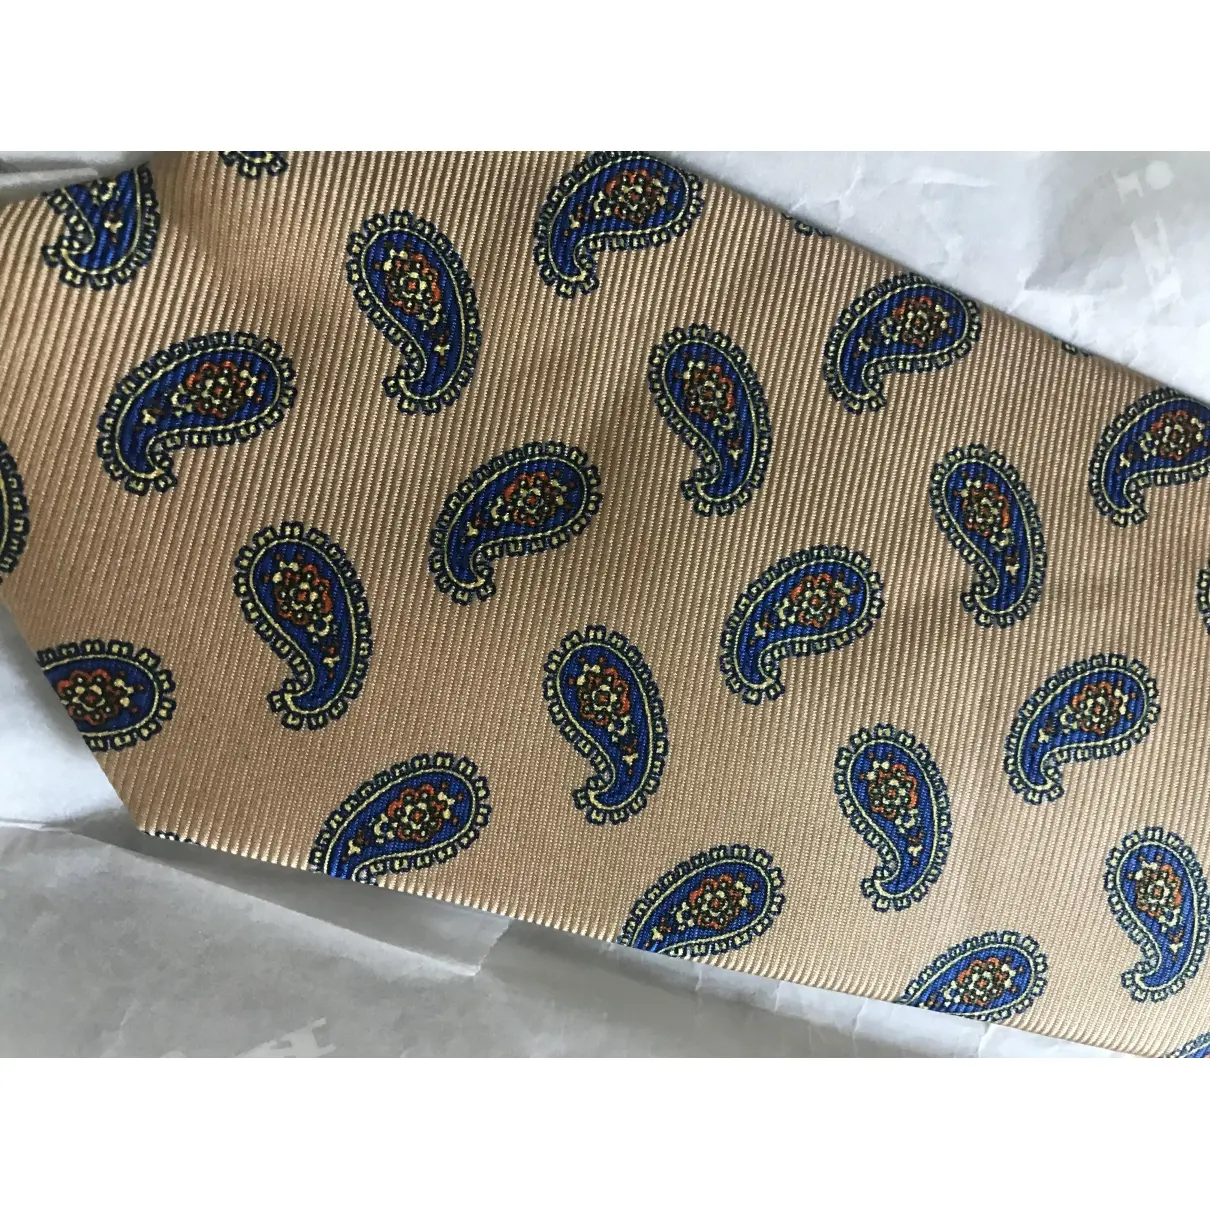 Kiton Silk tie for sale